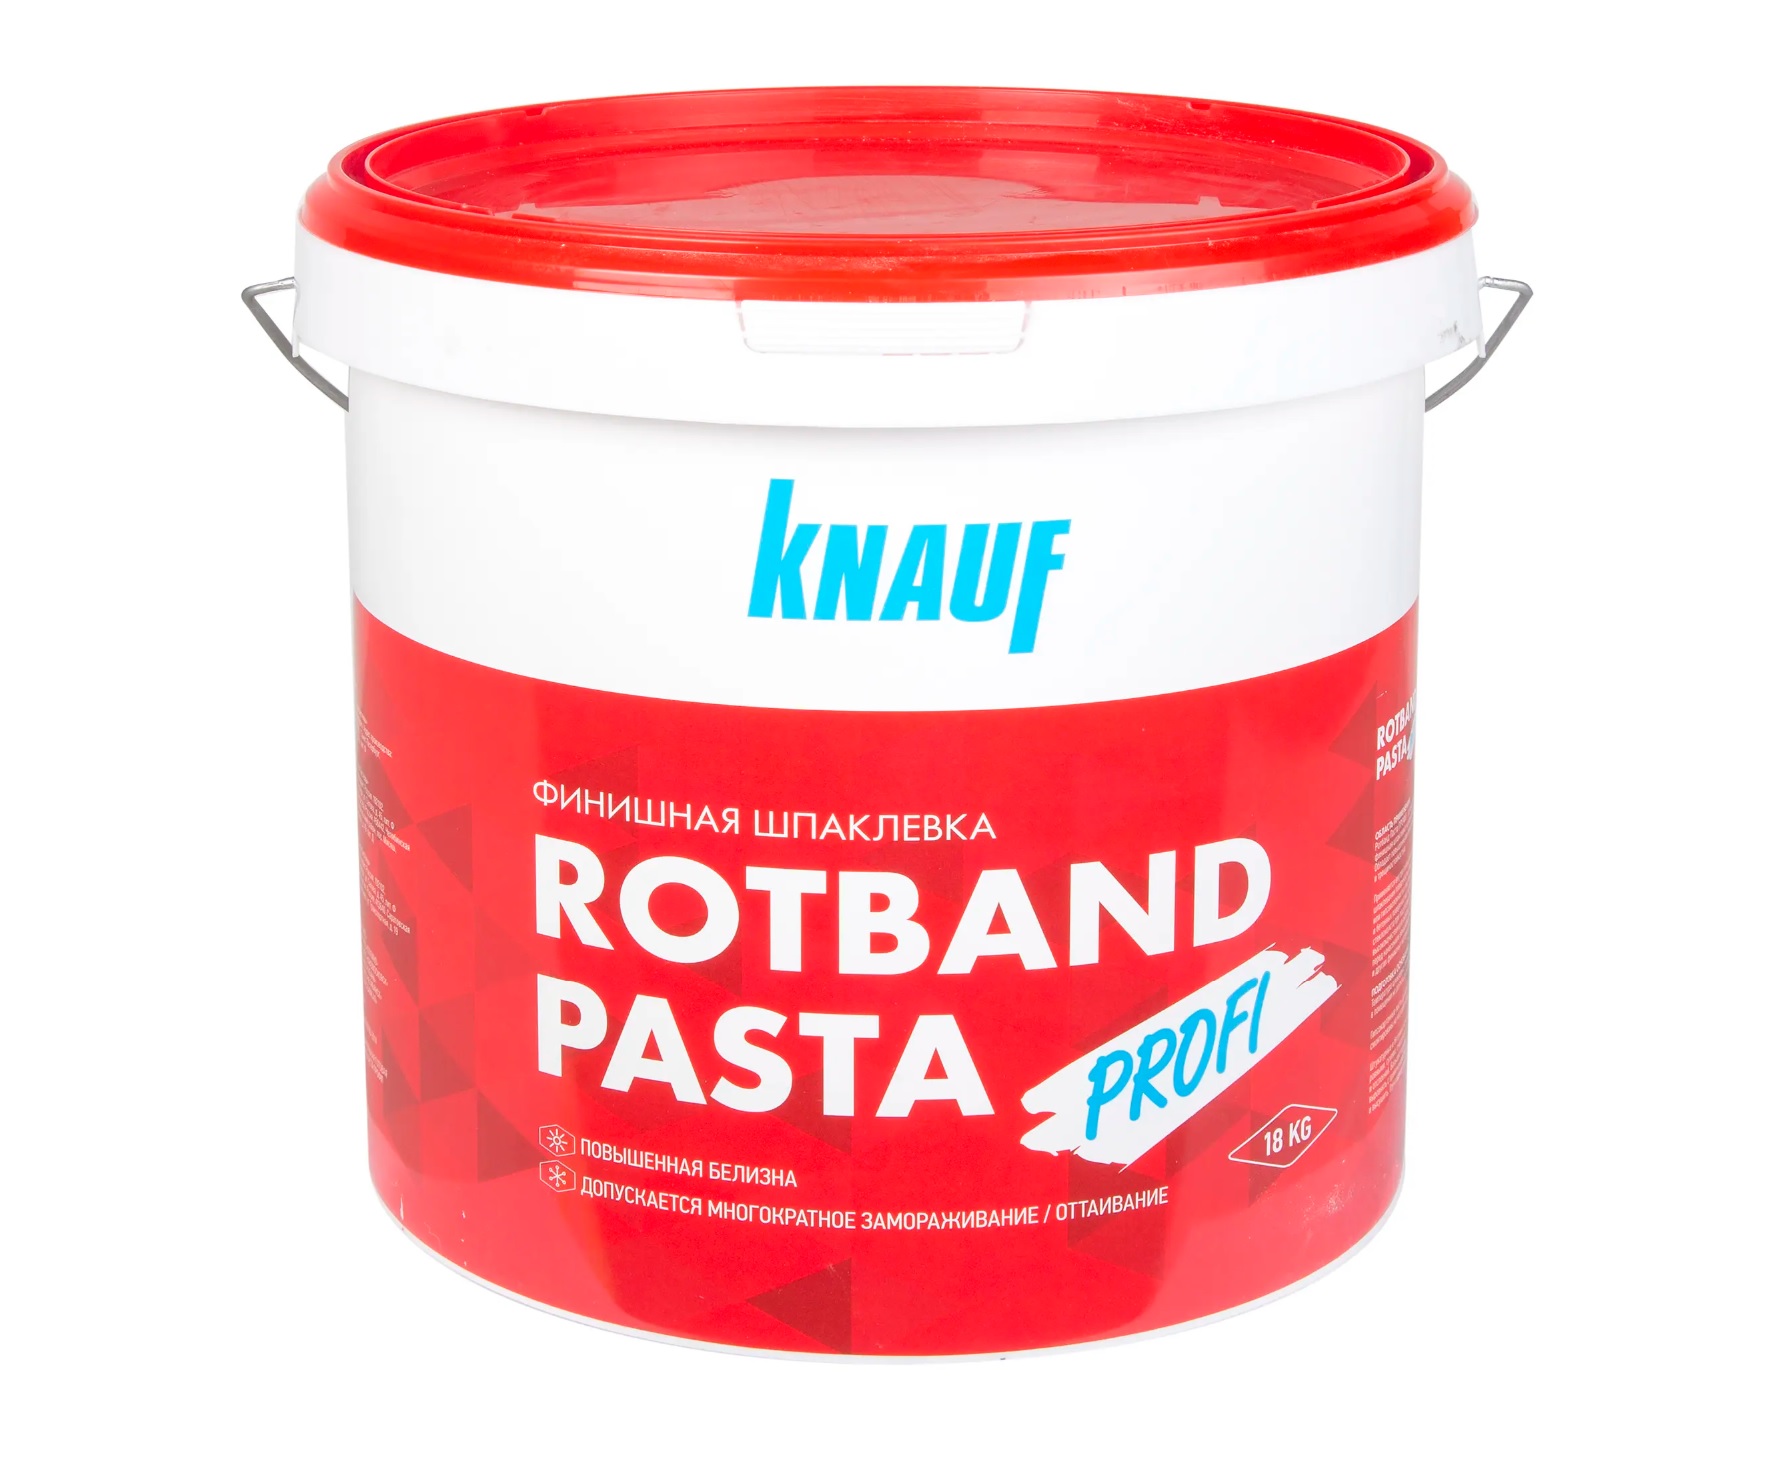 Шпатлевка финишная Ротбанд Паста Профи Кнауф (Knauf) 18 кг